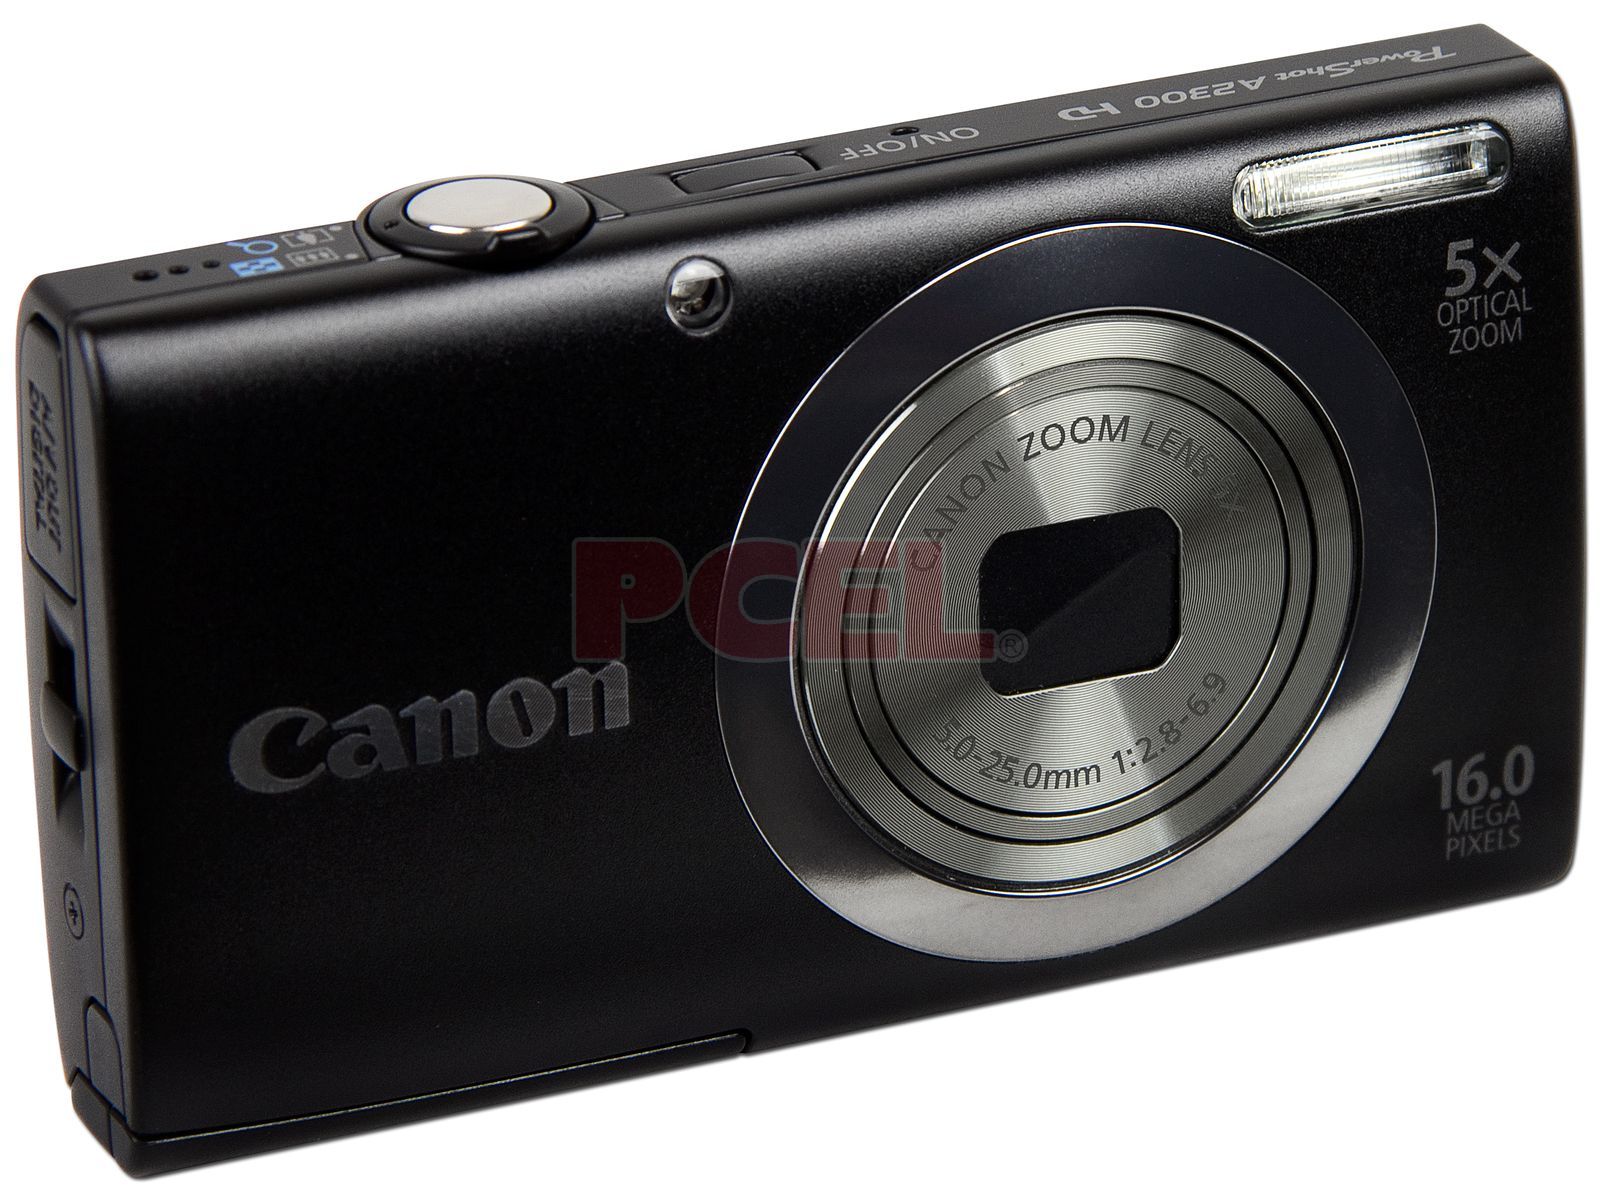 Cámara Digital Canon PowerShot A2300, 16 Mpx, Zoom Óptico 5x, LCD